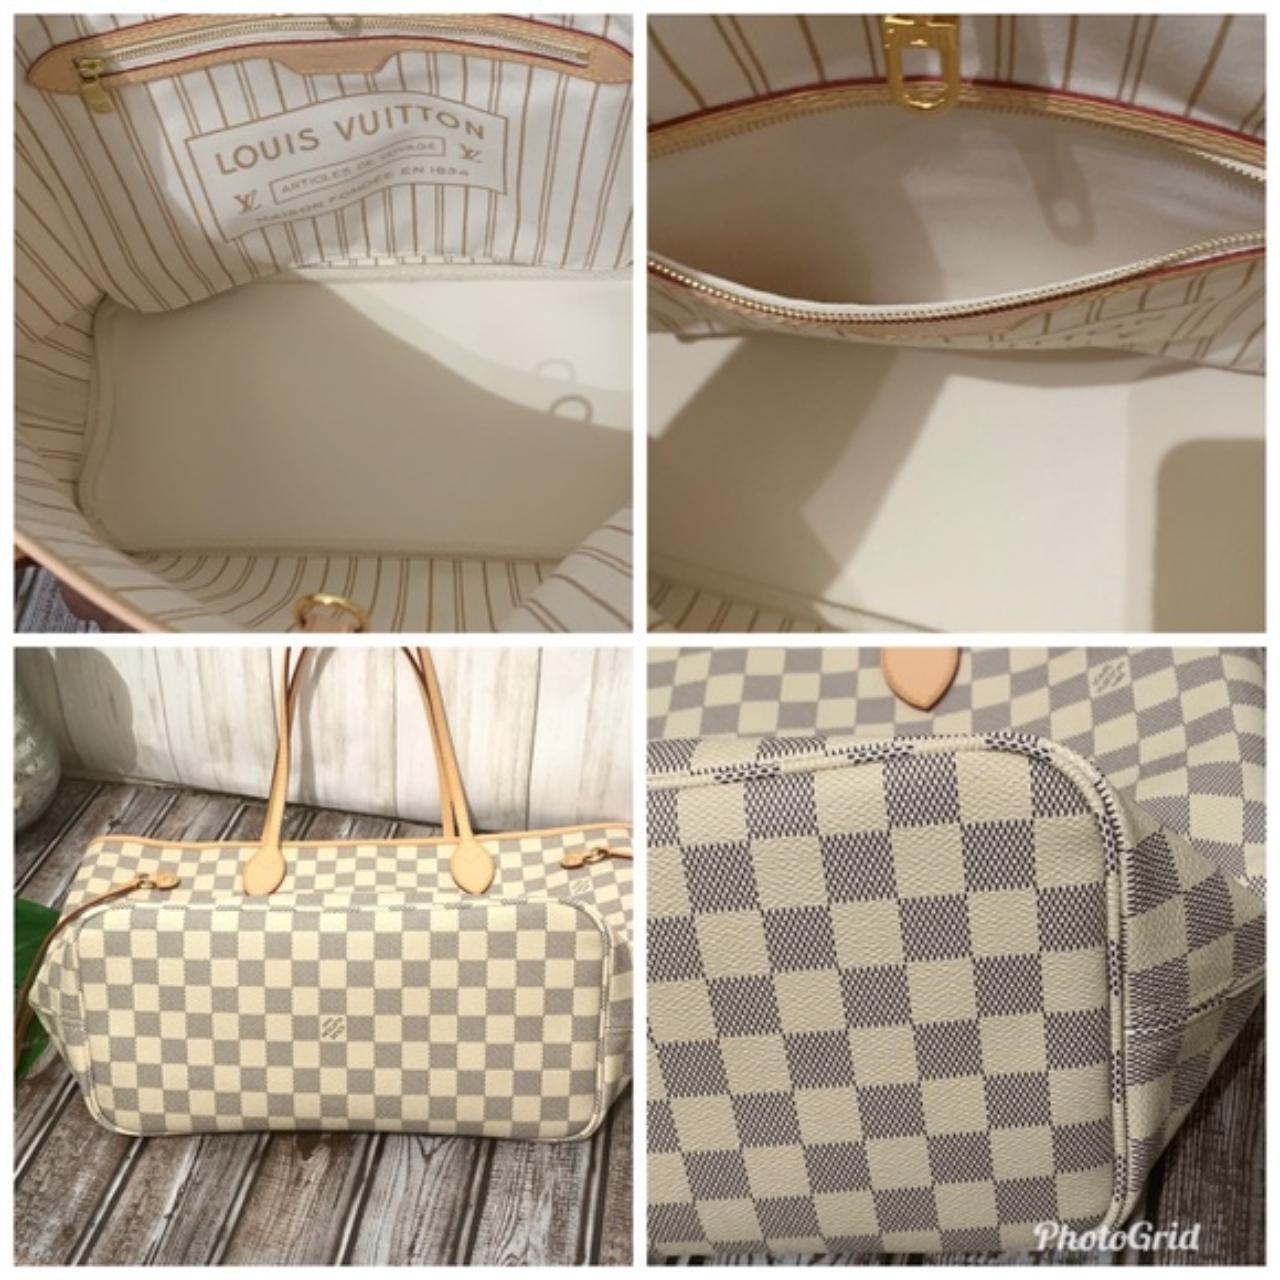 LV white checkered bag. Pink interior. Size: - Depop